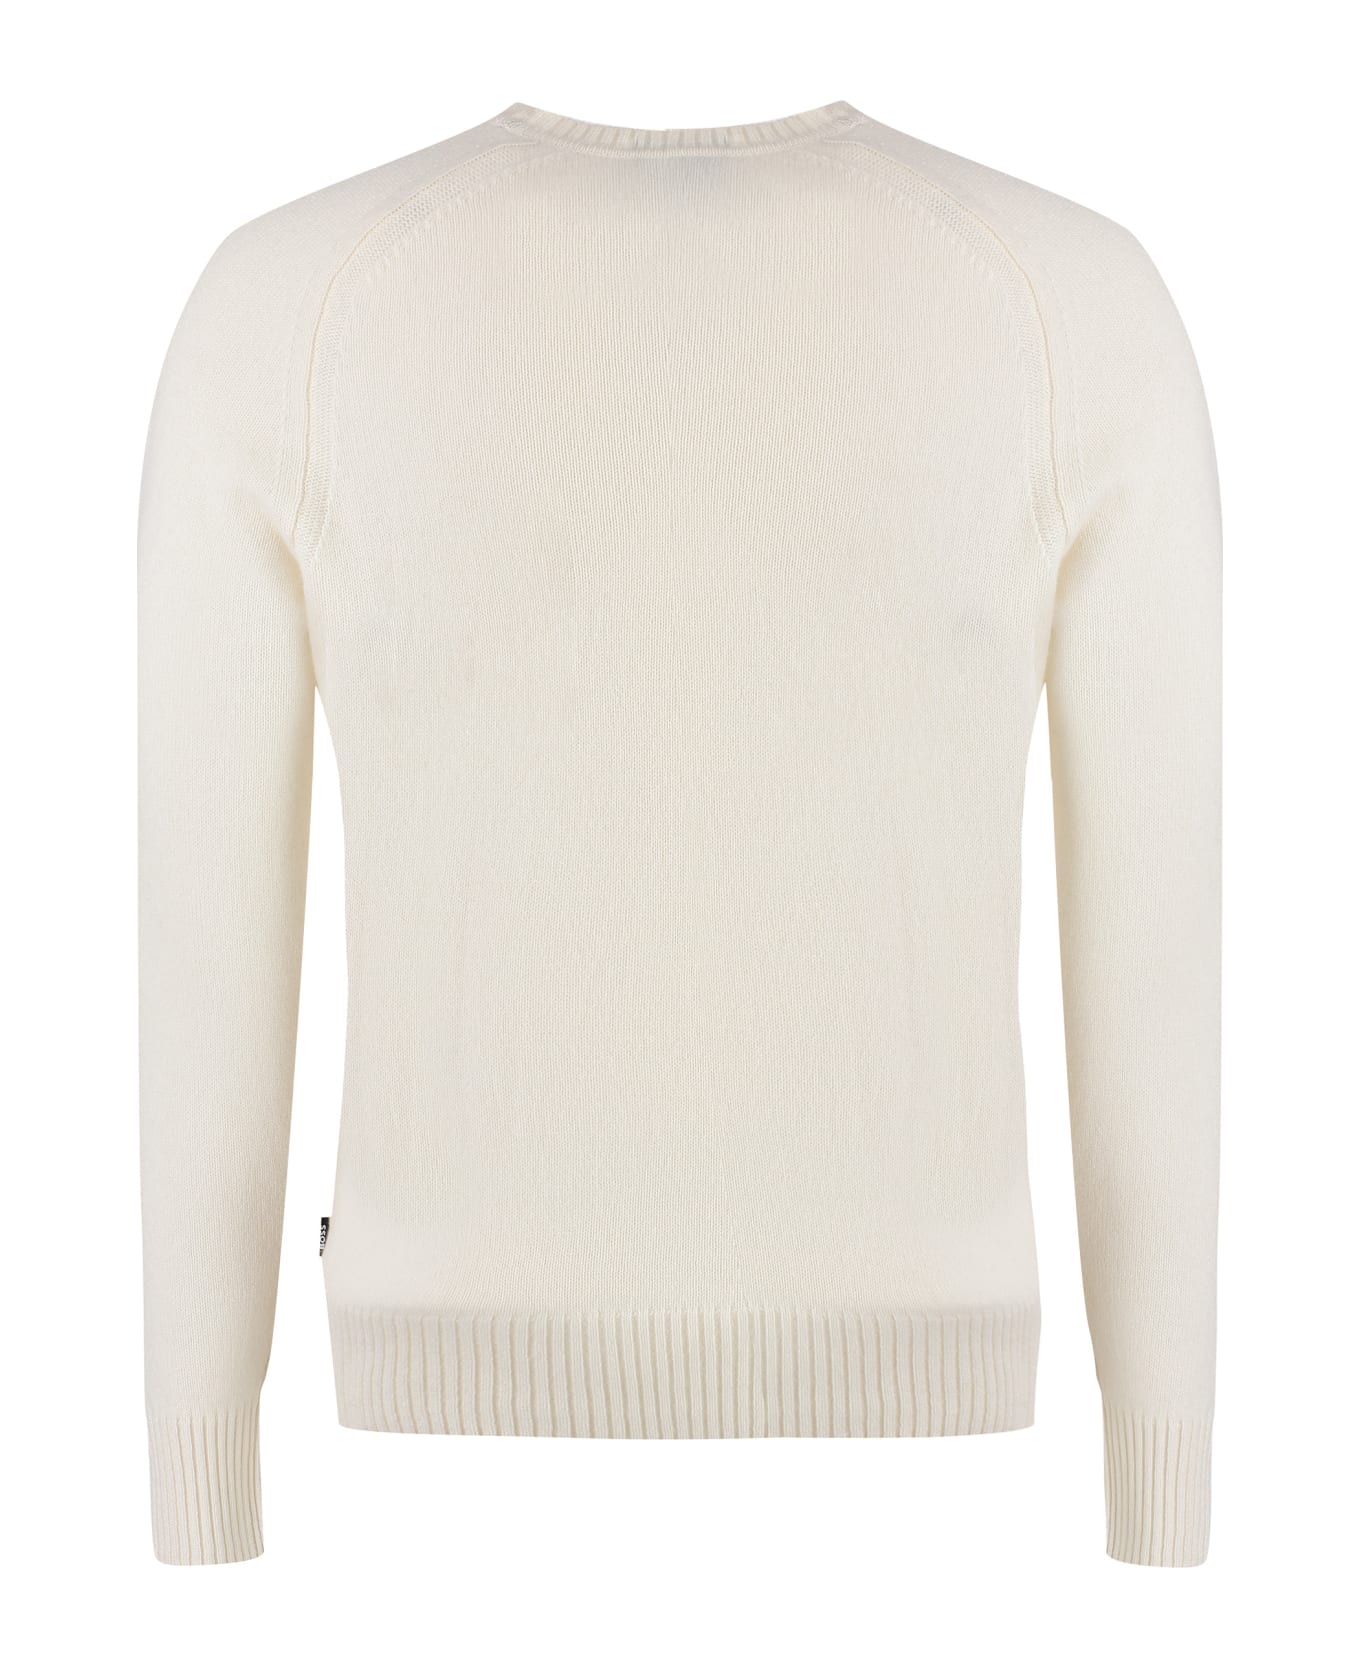 Hugo Boss Crew-neck Cashmere Sweater - White